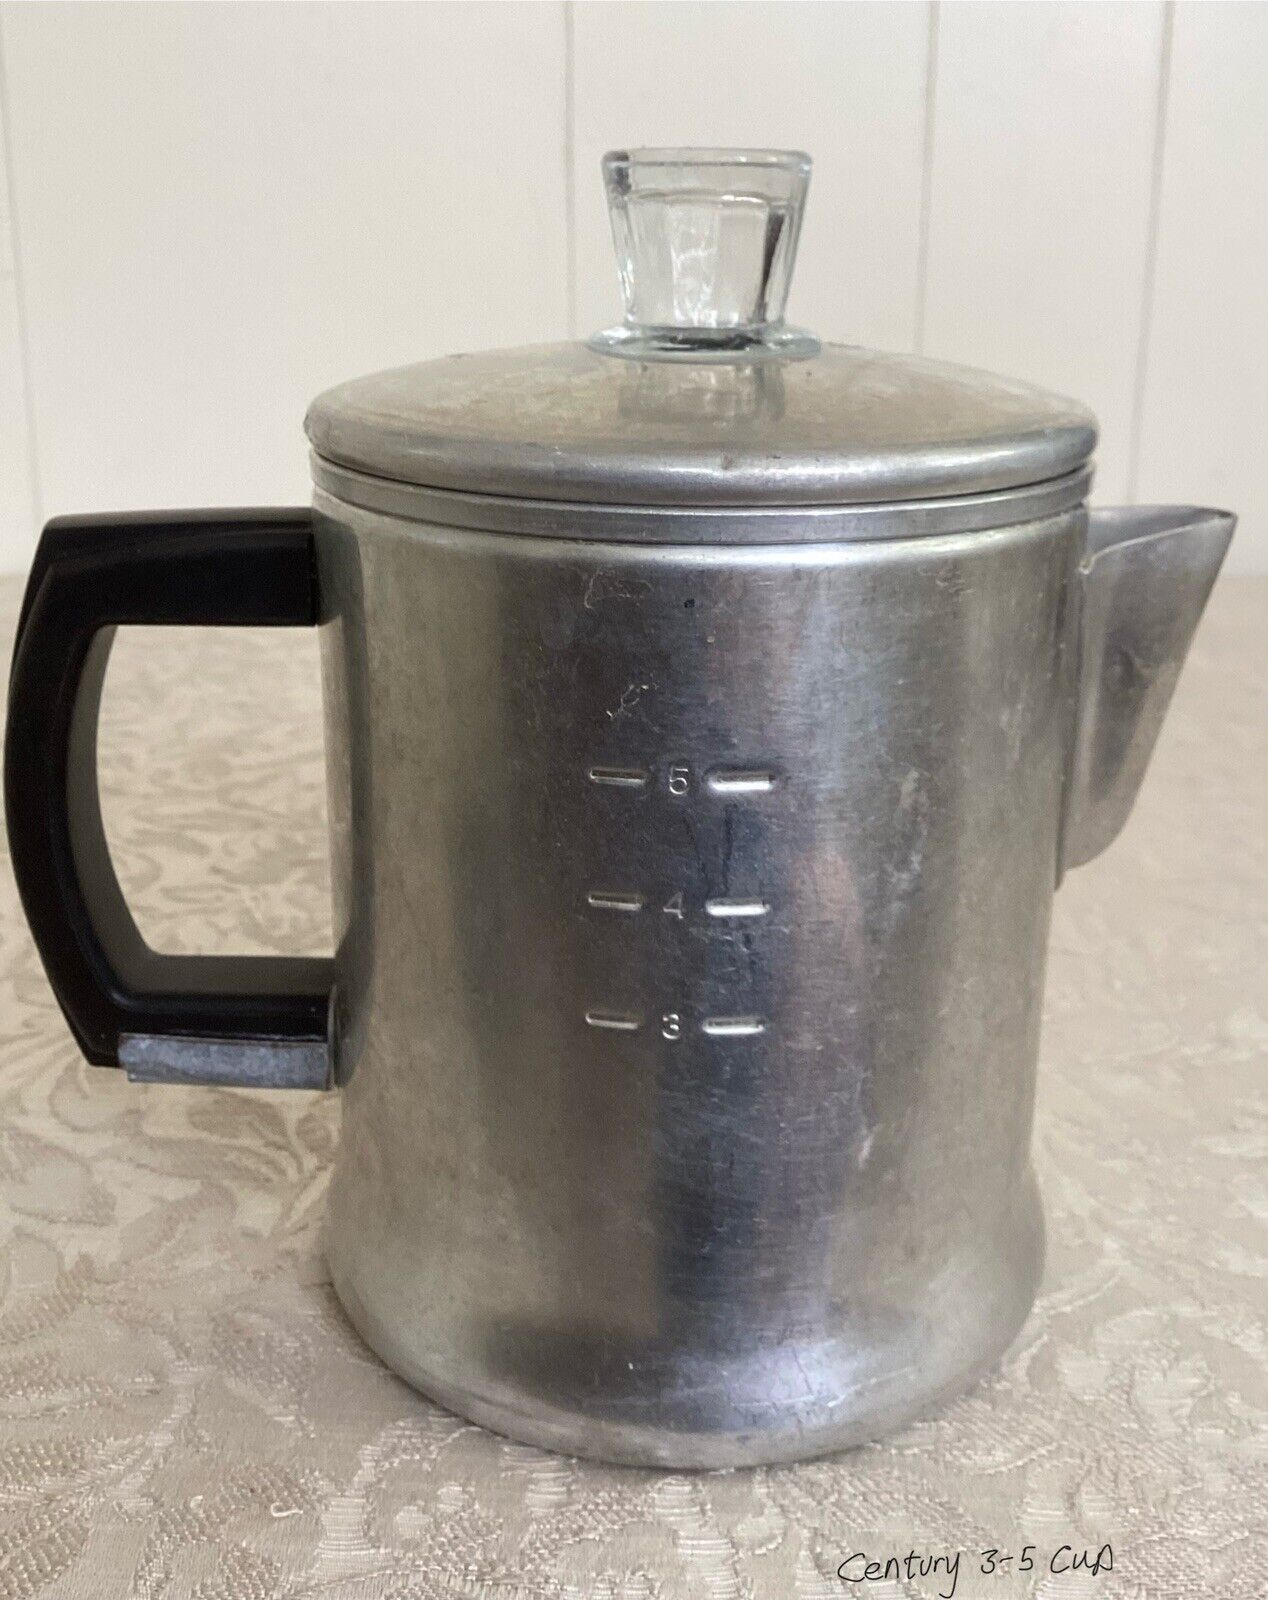 Vintage CENTURY Aluminum Ware 3-5 cup Percolator COFFEE POT Stove Top